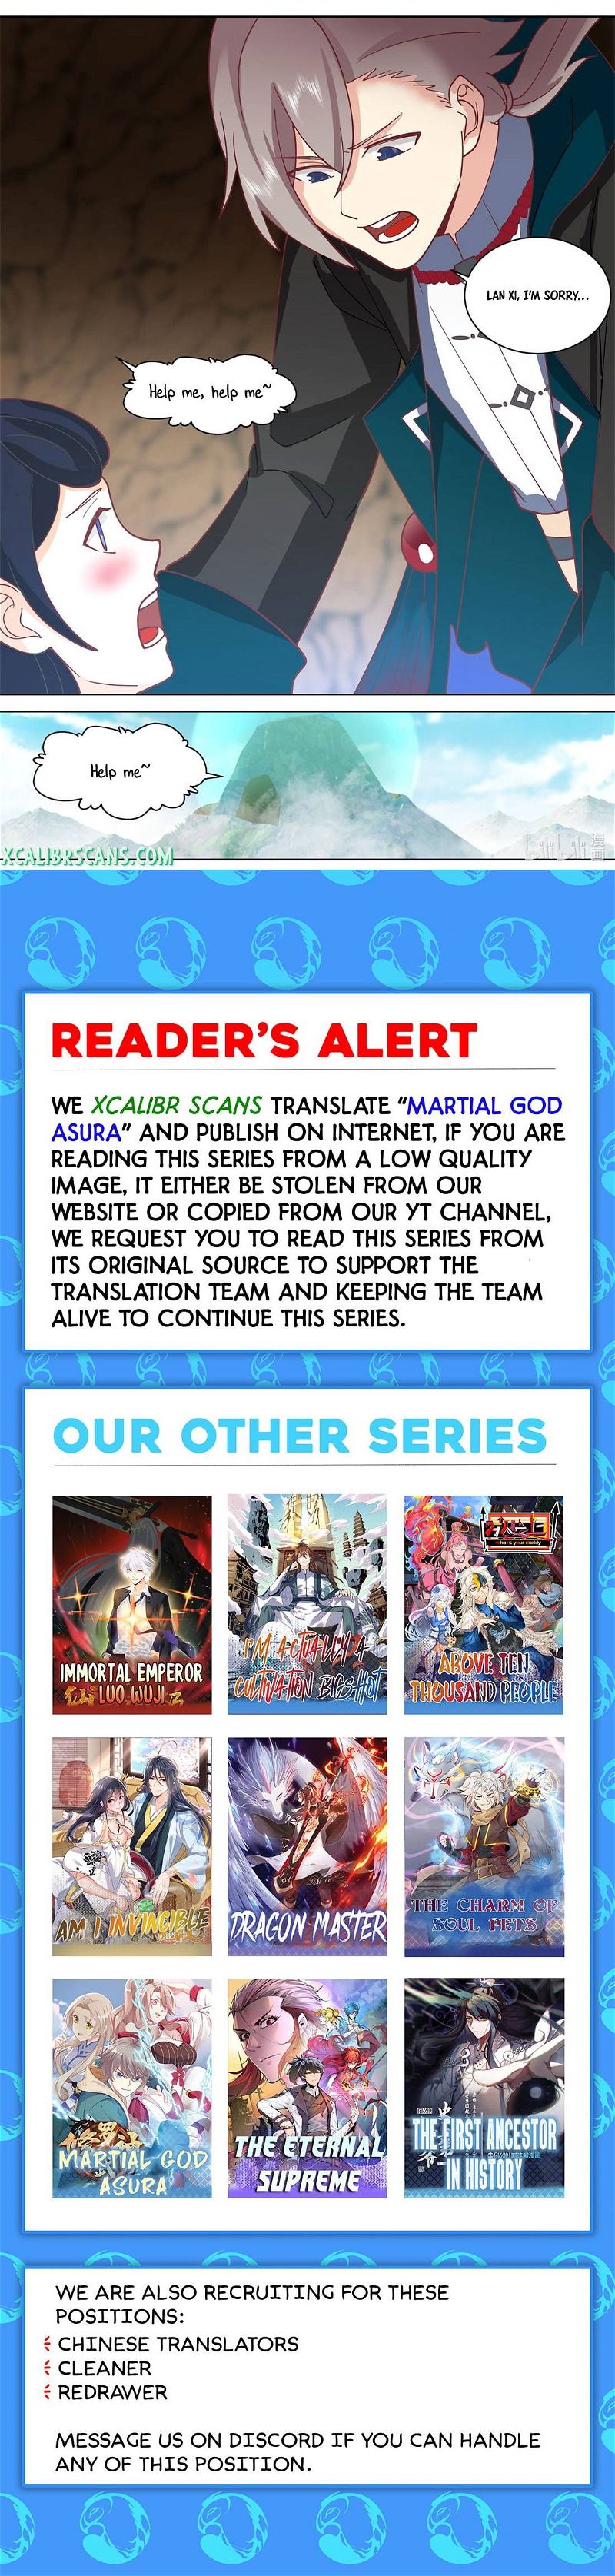 Martial God Asura Chapter 499 page 10